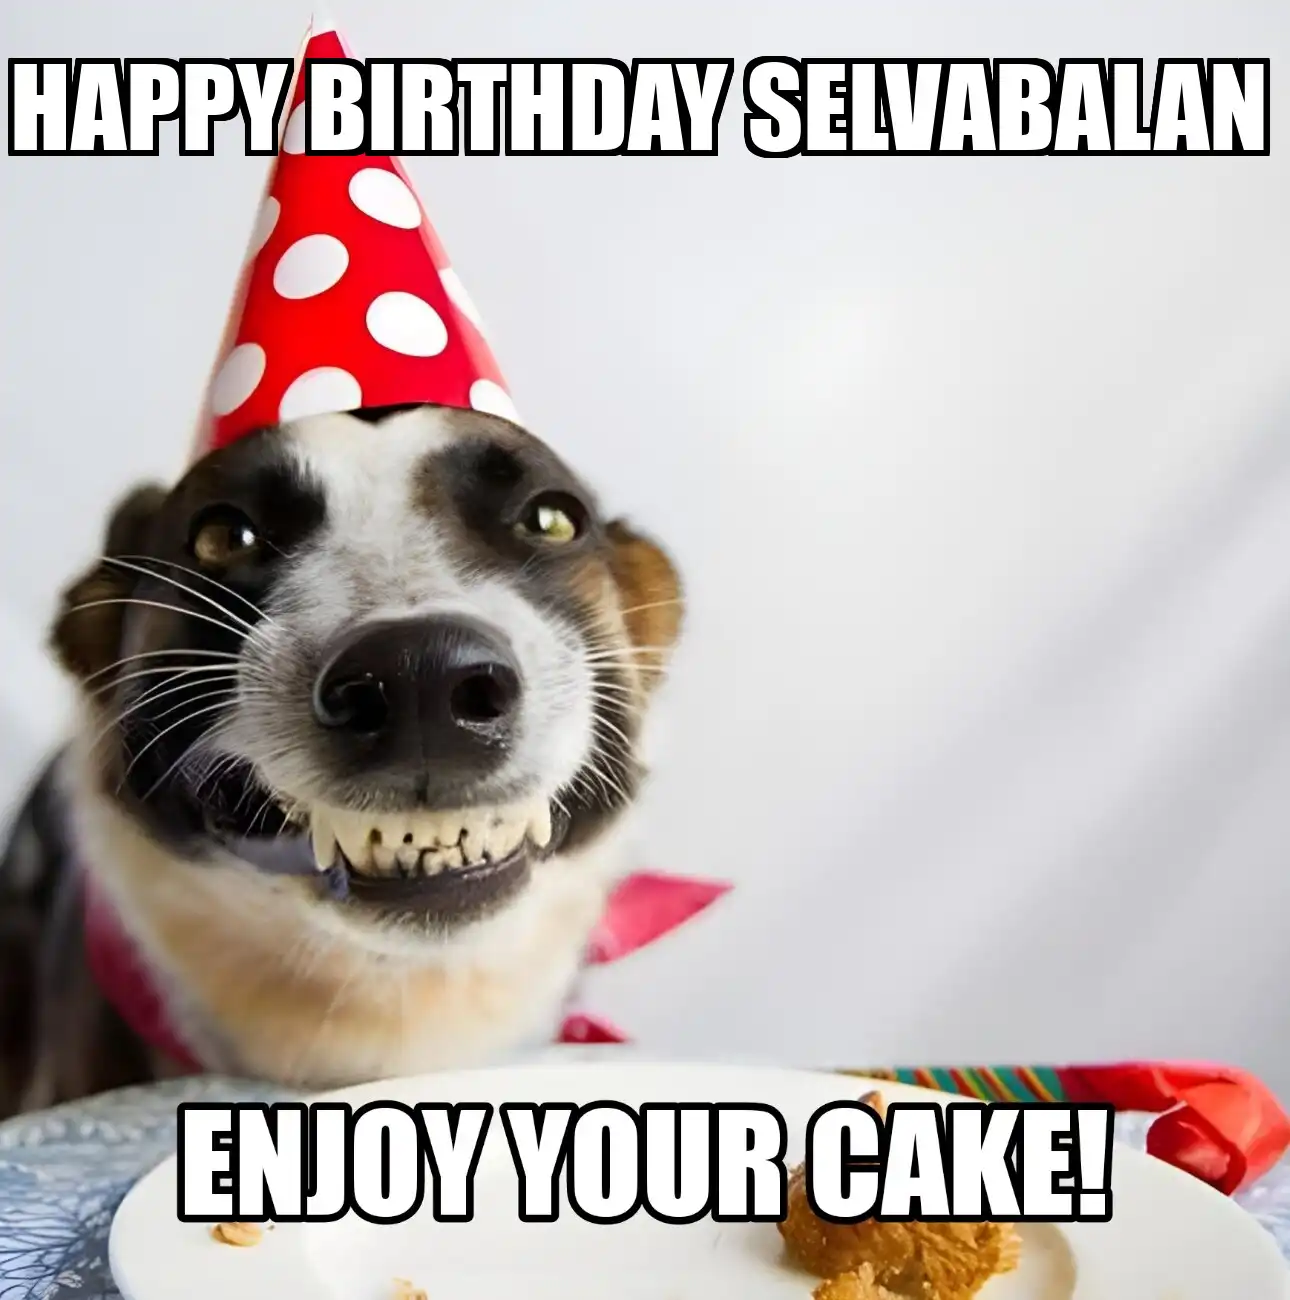 Happy Birthday Selvabalan Enjoy Your Cake Dog Meme